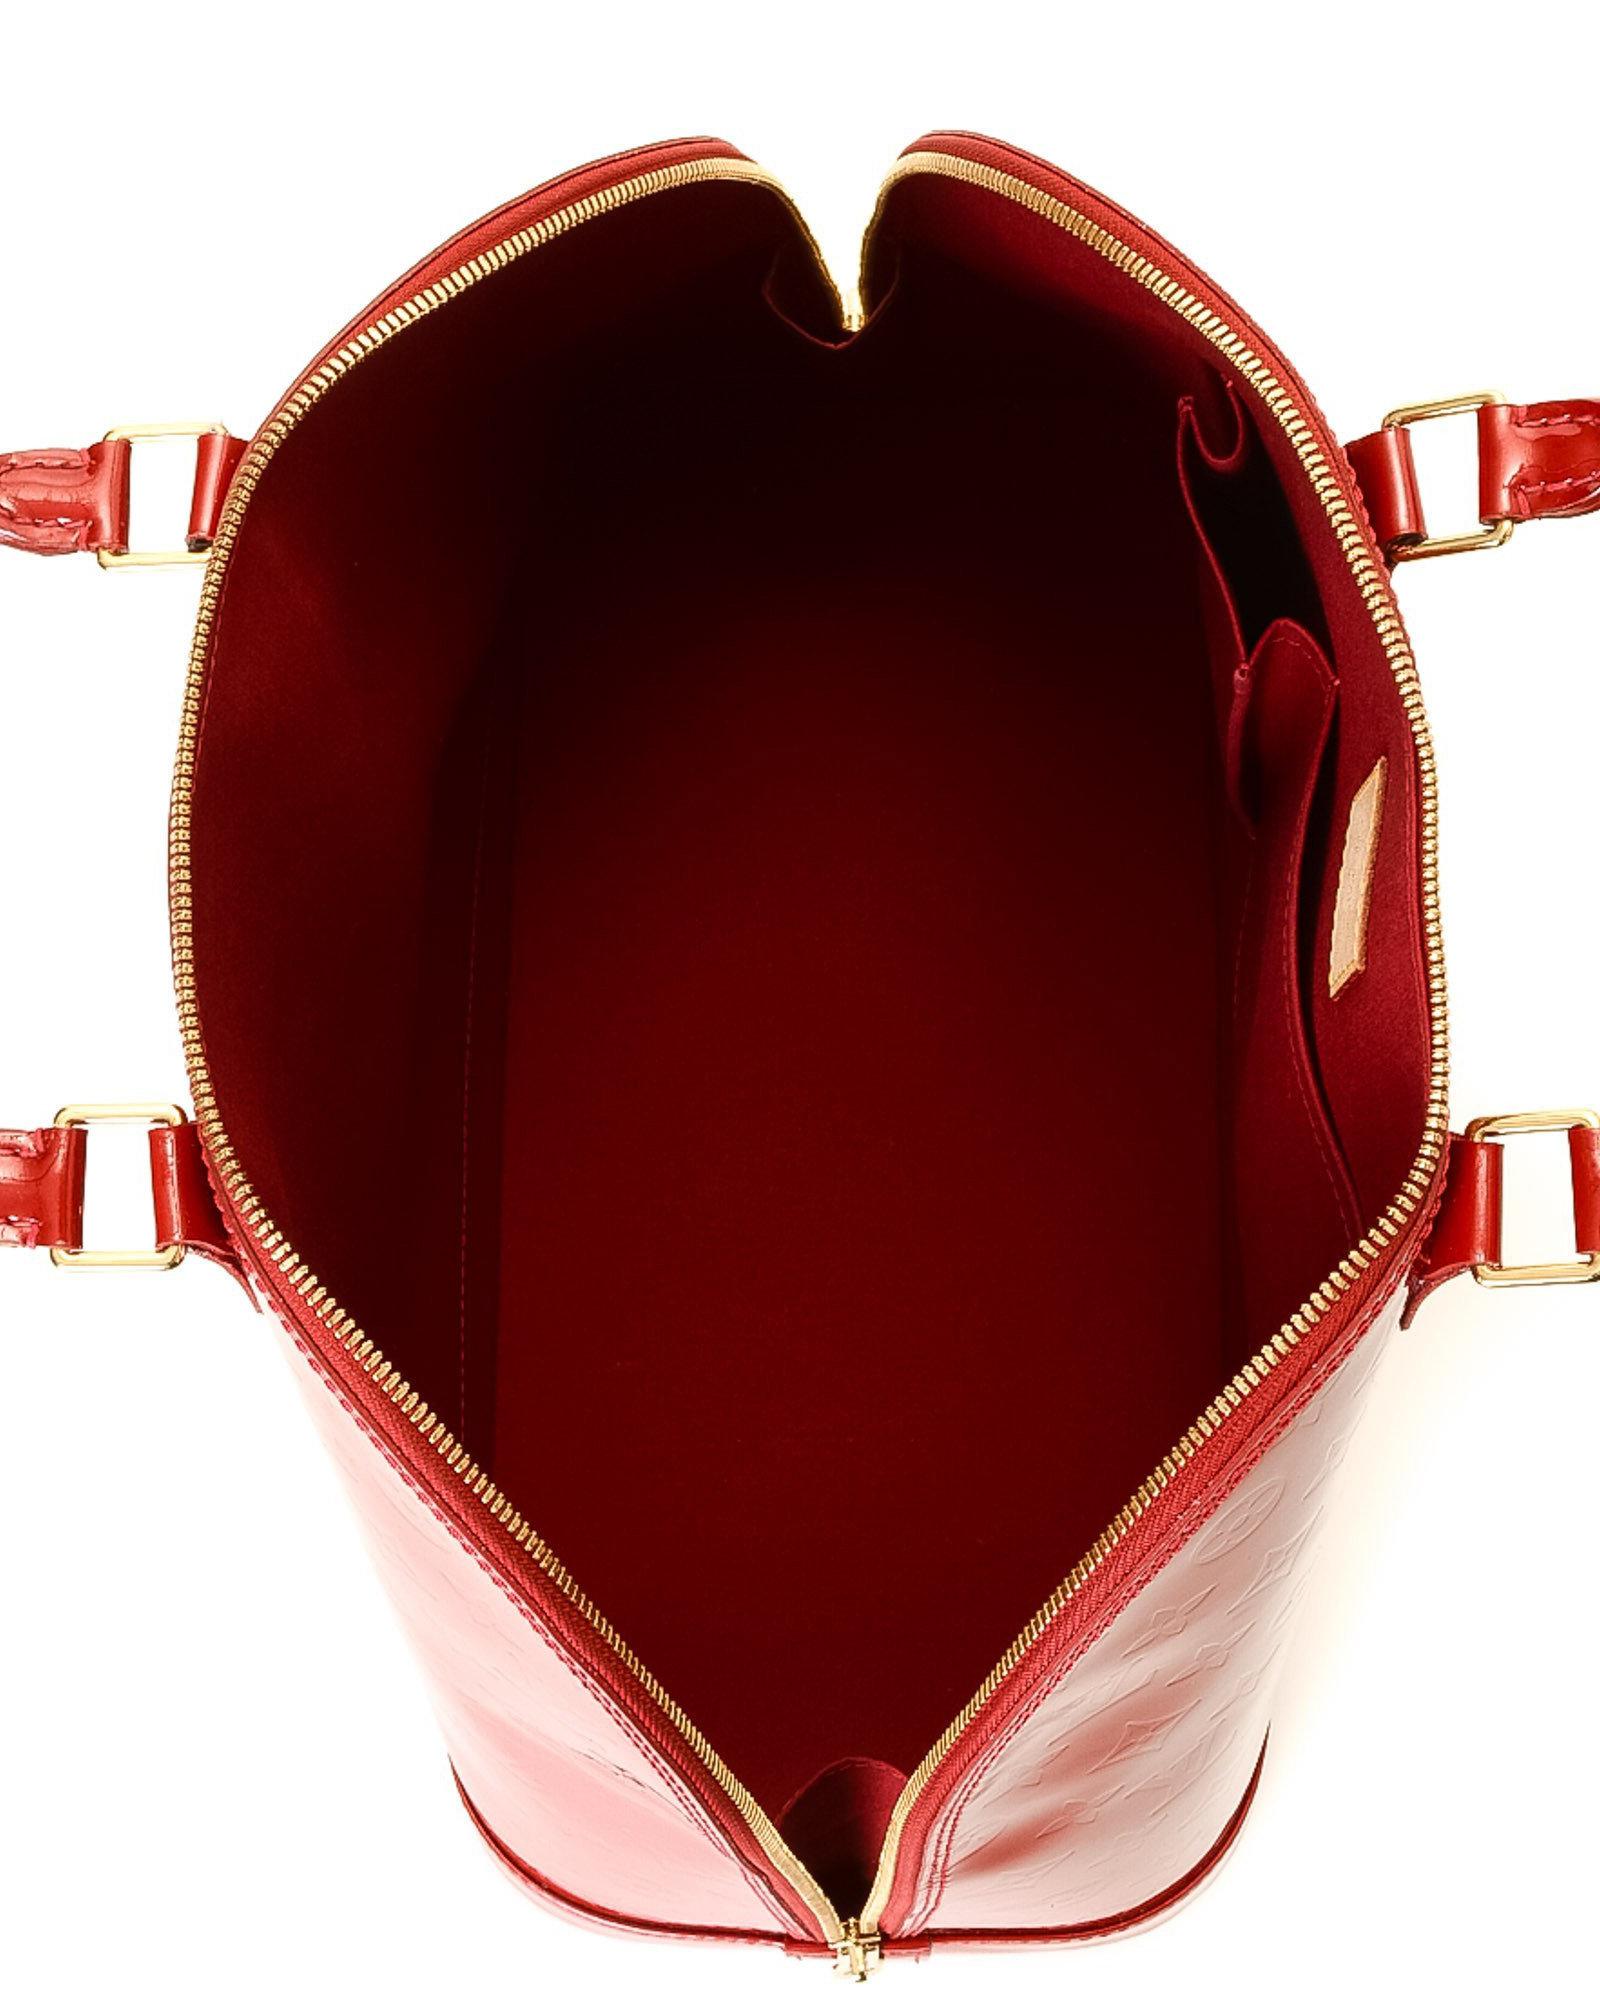 Lyst - Louis Vuitton Vernis Alma Gm Handbag - Vintage in Red